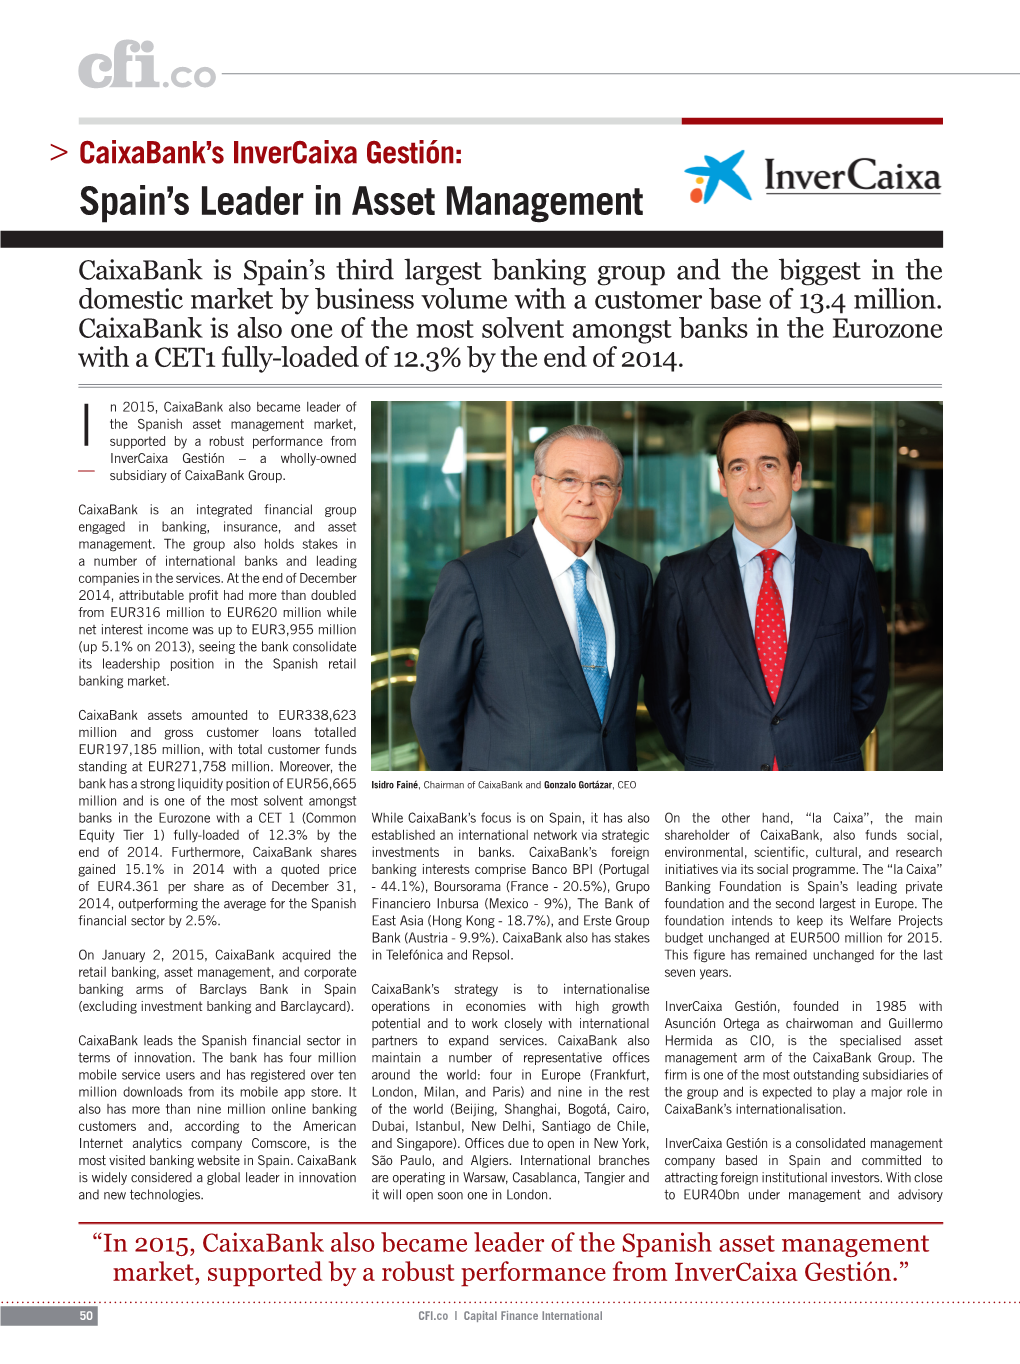 Spain's Leader in Asset Management